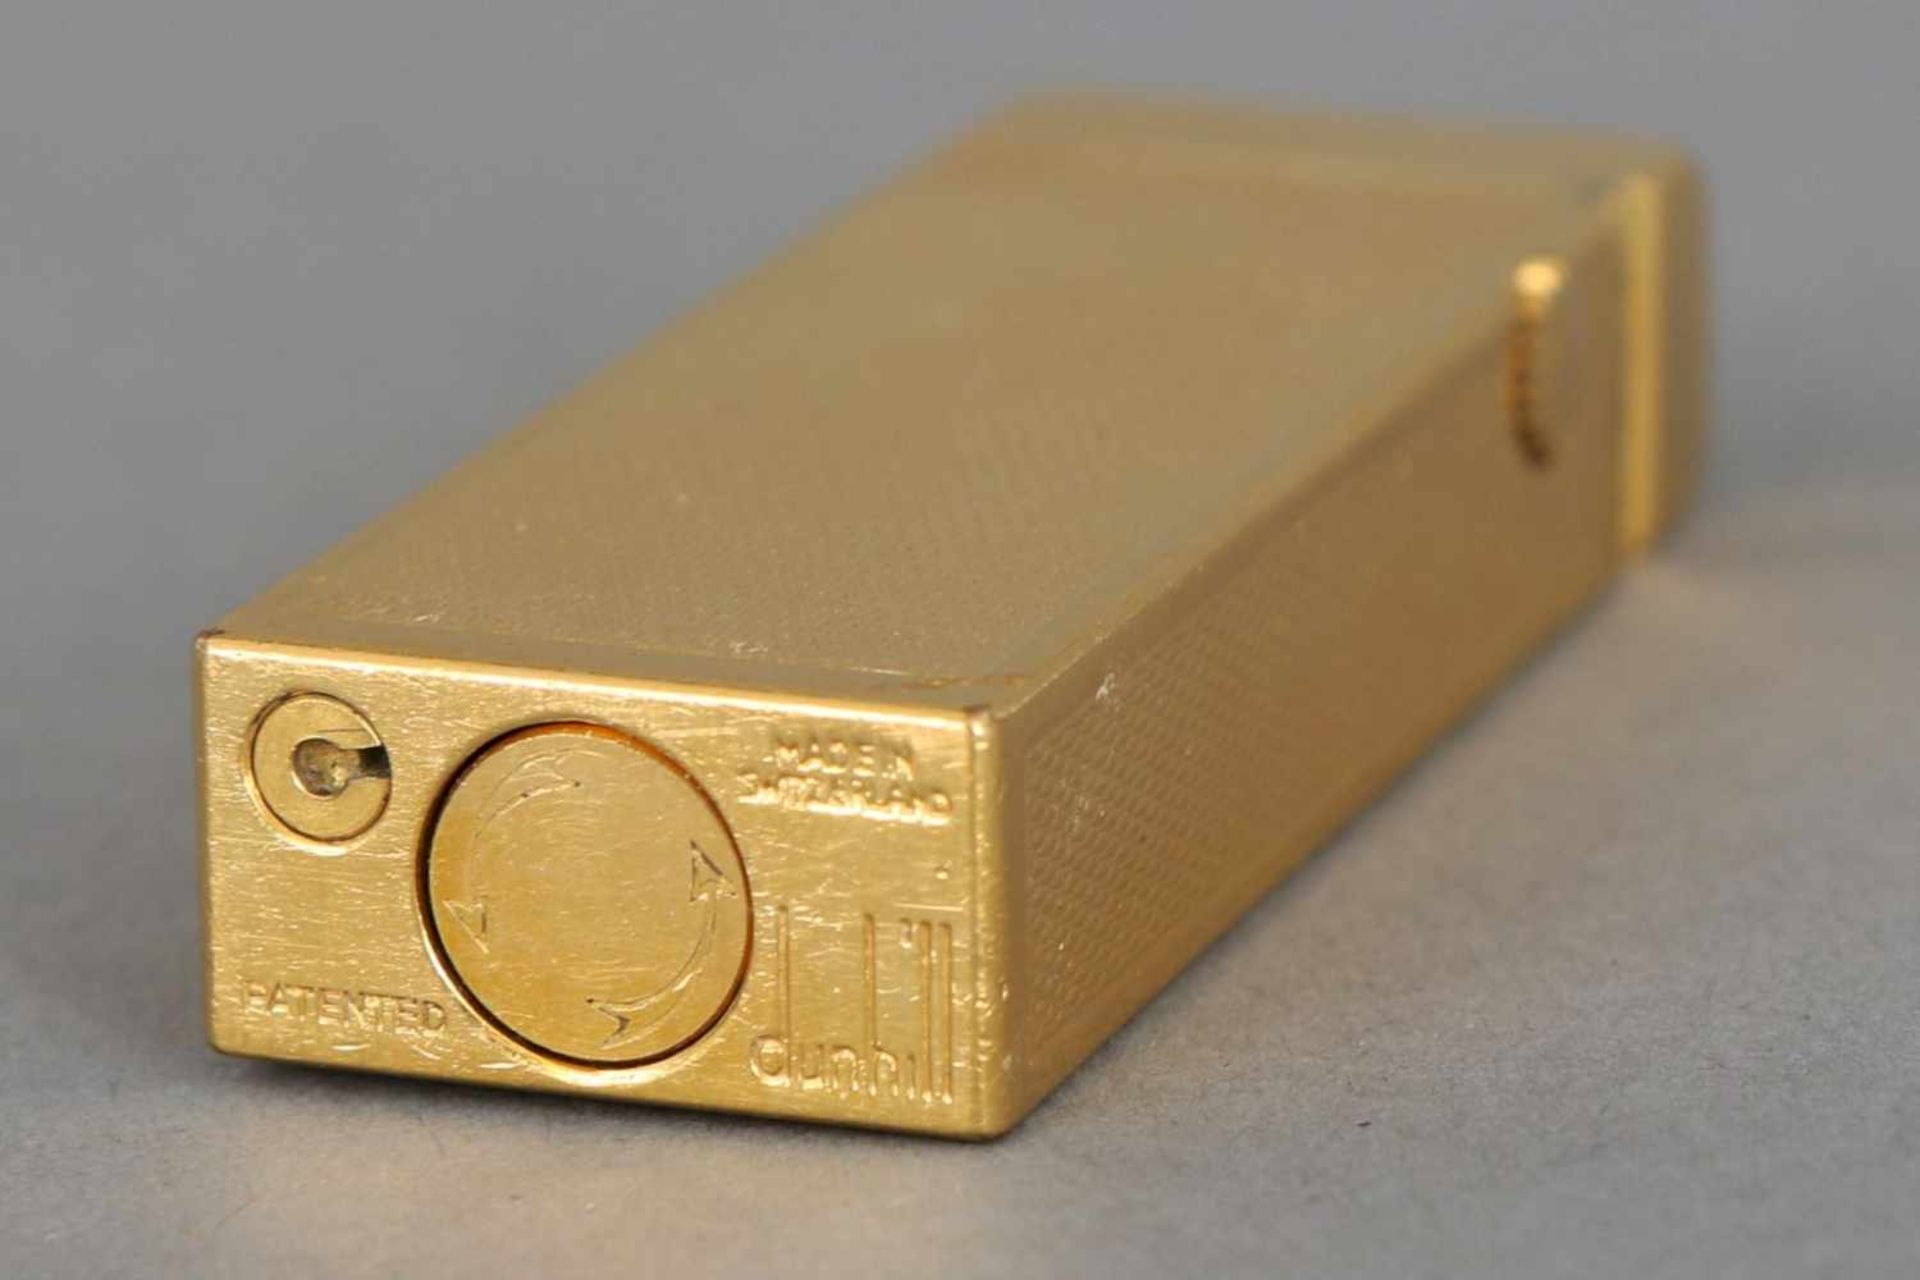 Dunhill Feuerzeugvergoldetes Metall, fein guillochiertes Rautendekor, im (ergänzten) Dunhill-Etui - Image 2 of 2